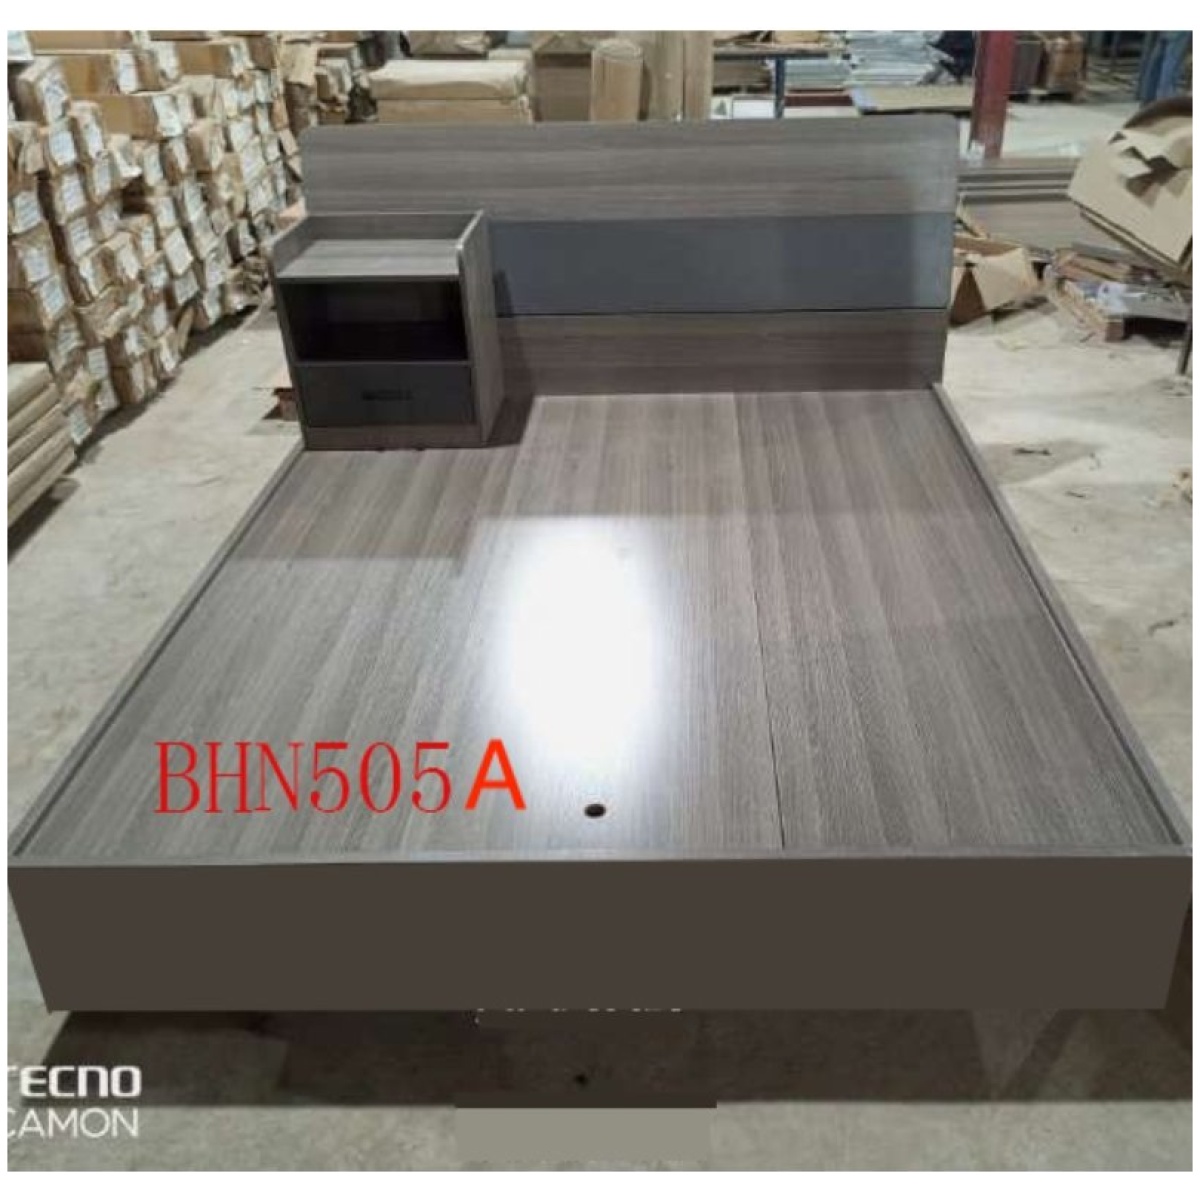 Bed Frame (BHN505A)